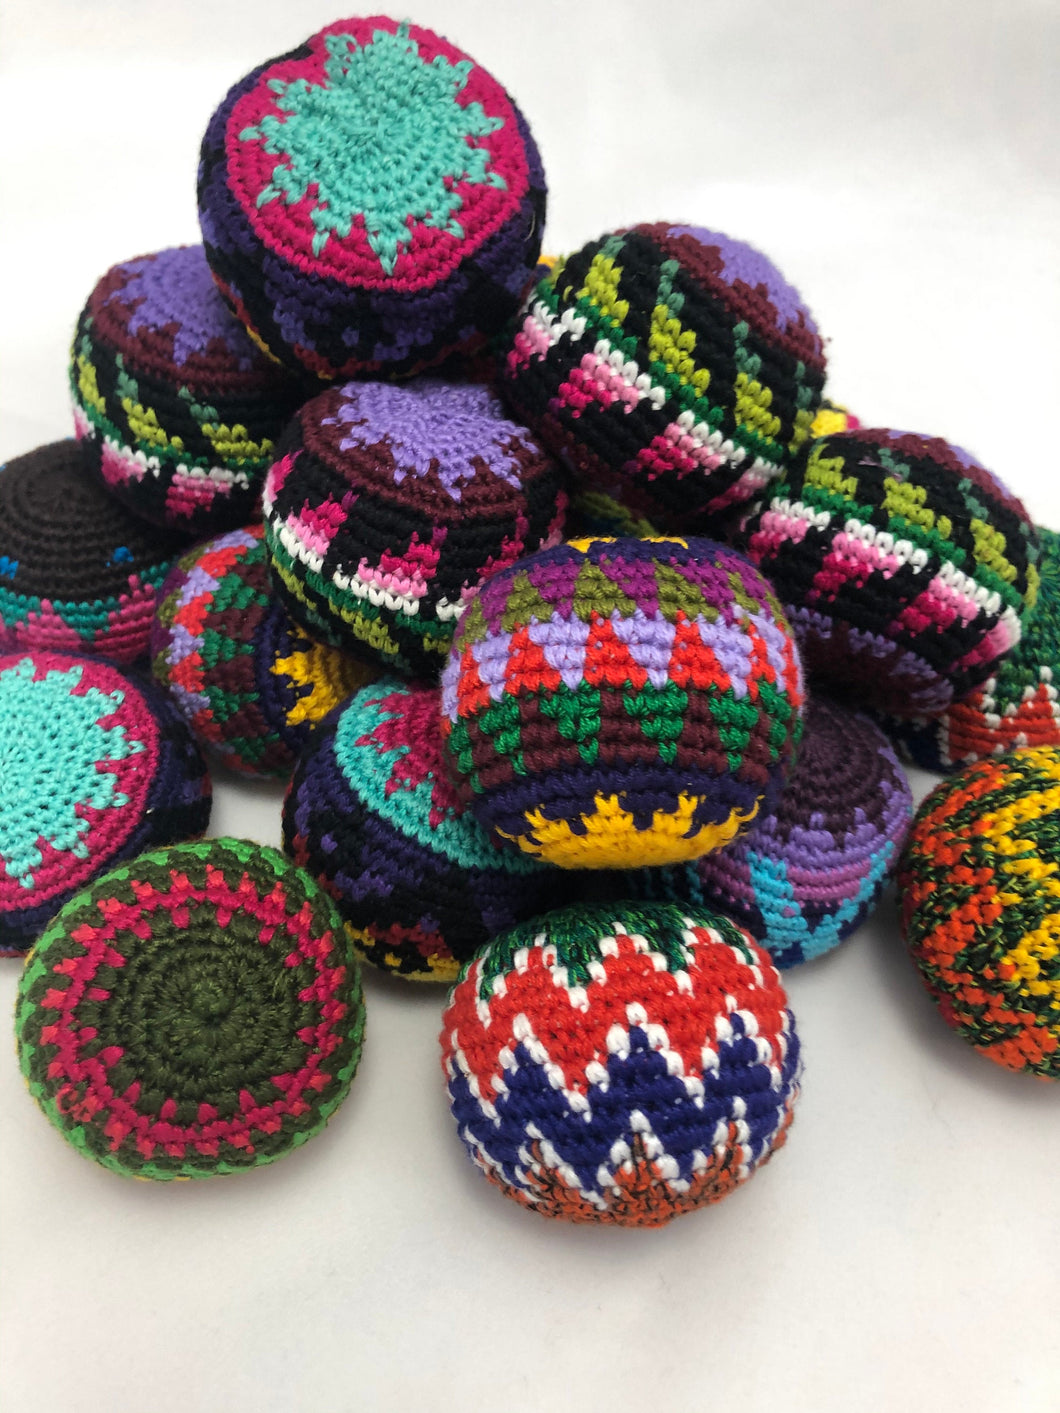 Buy now online from Emma's Emporium! Handmade Guatemalan Juggling Balls